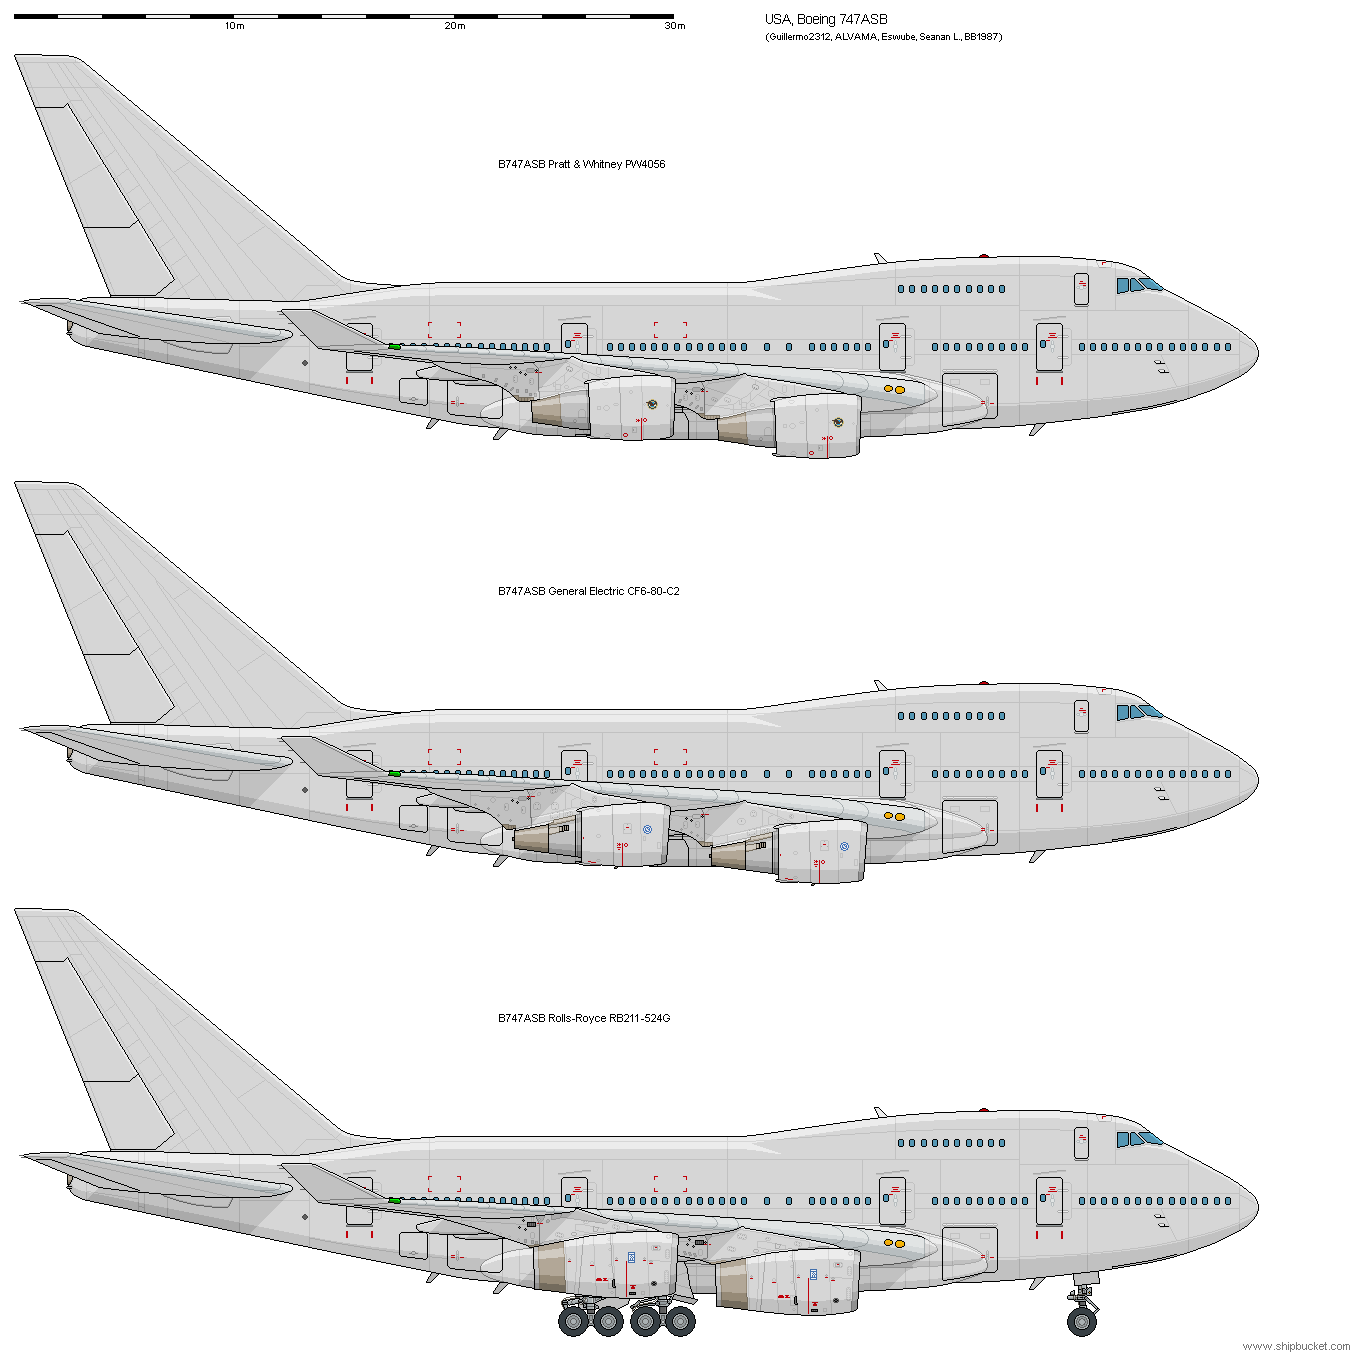 ASB 747